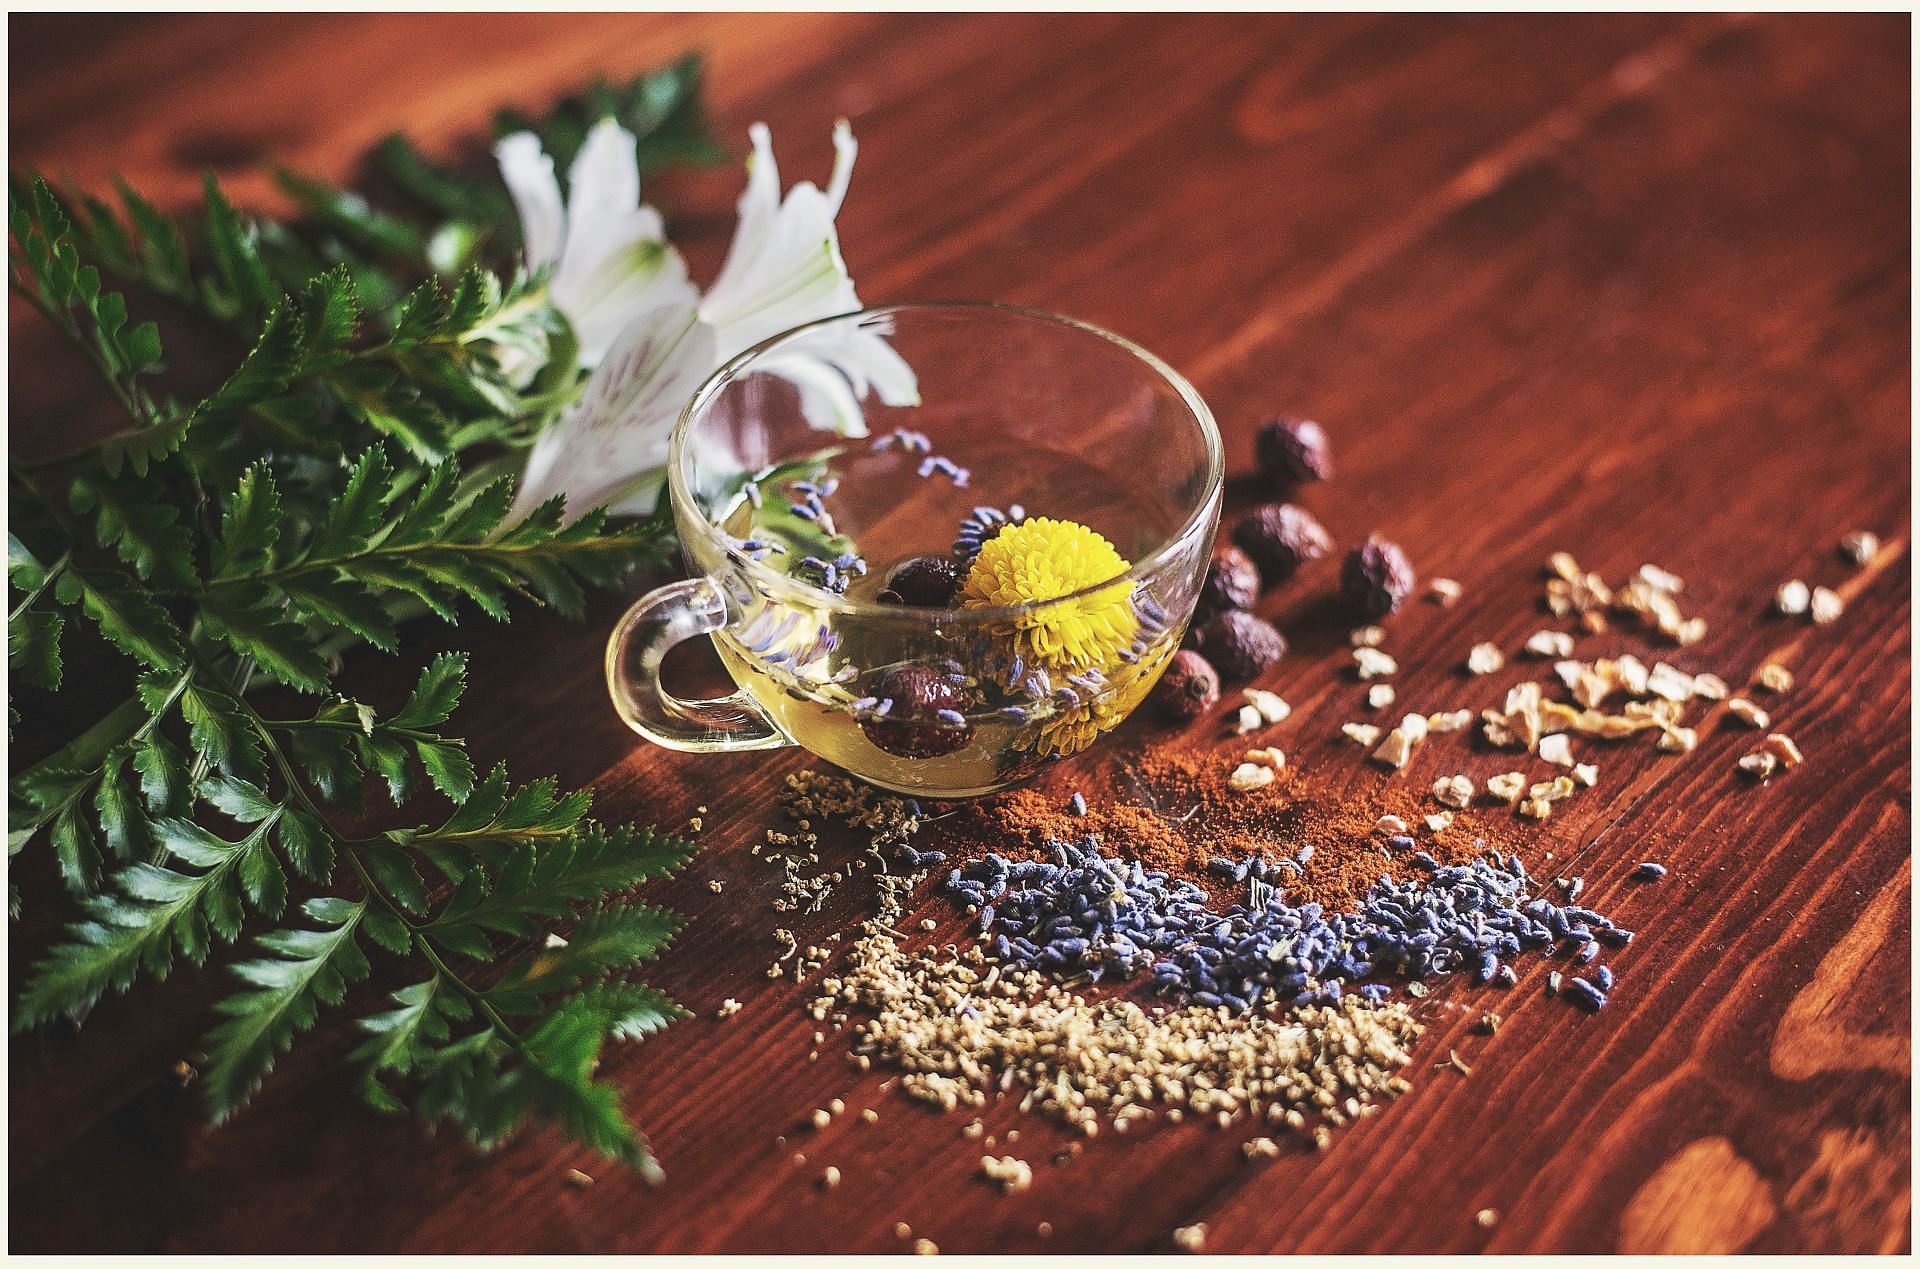 Chamomile tea and chamomile oil are proven remedies. (Image by Lisa Hobbs/Unsplash)